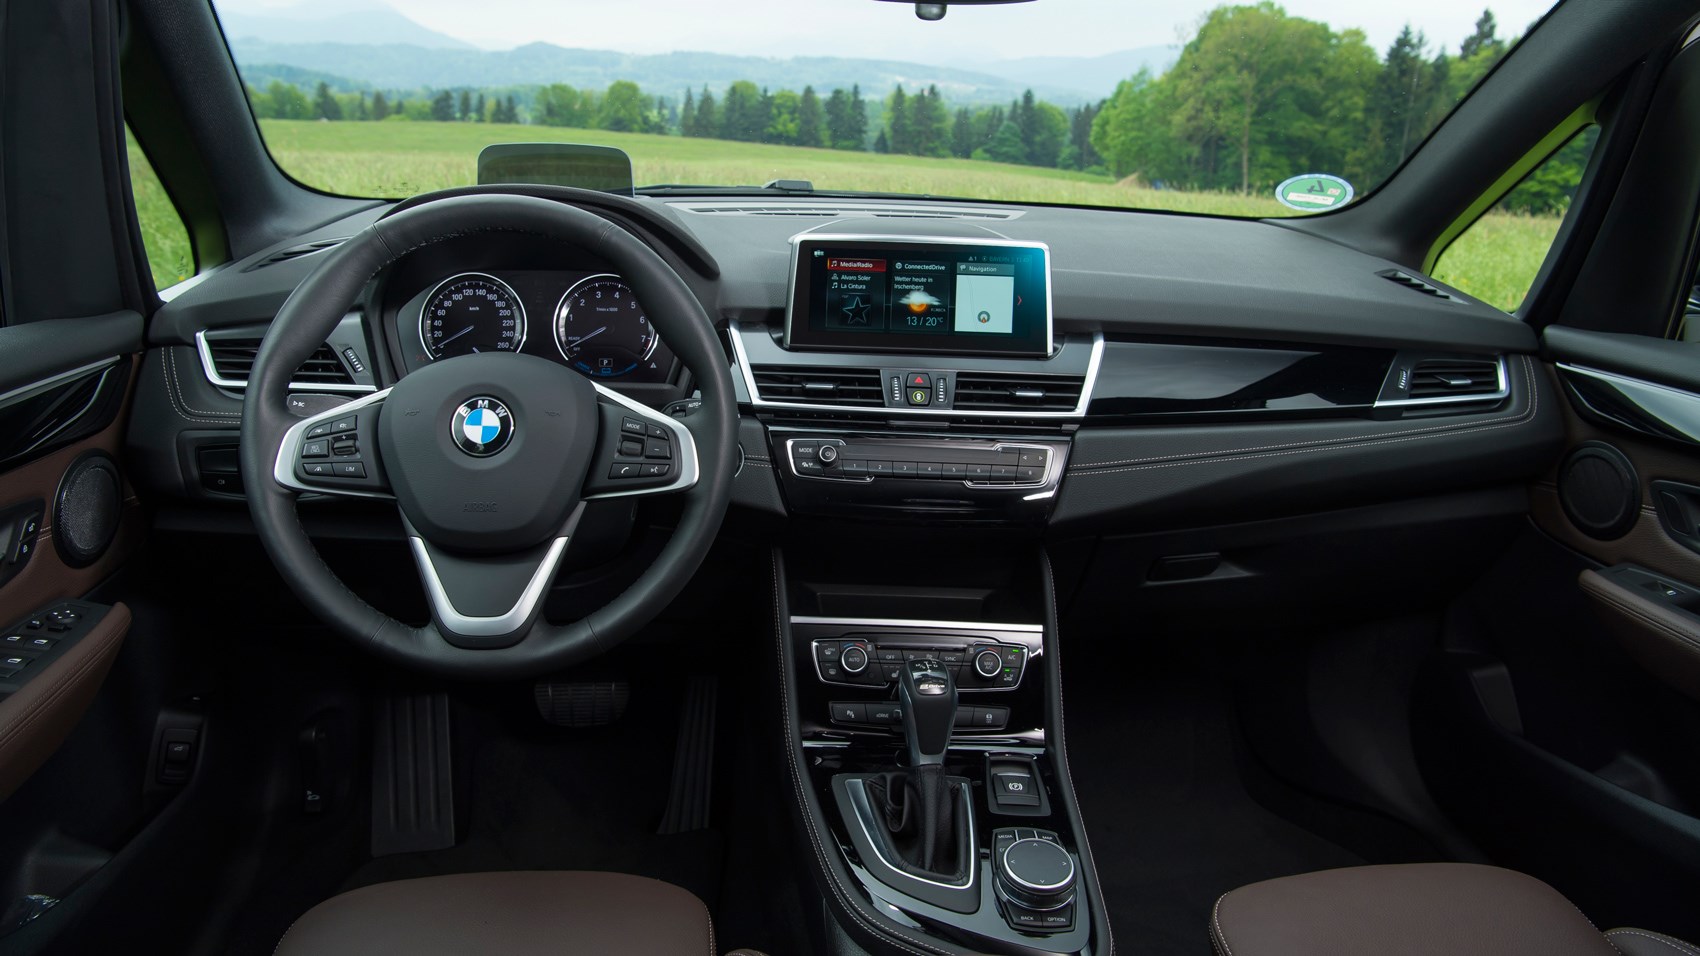 BMW 225xe interior